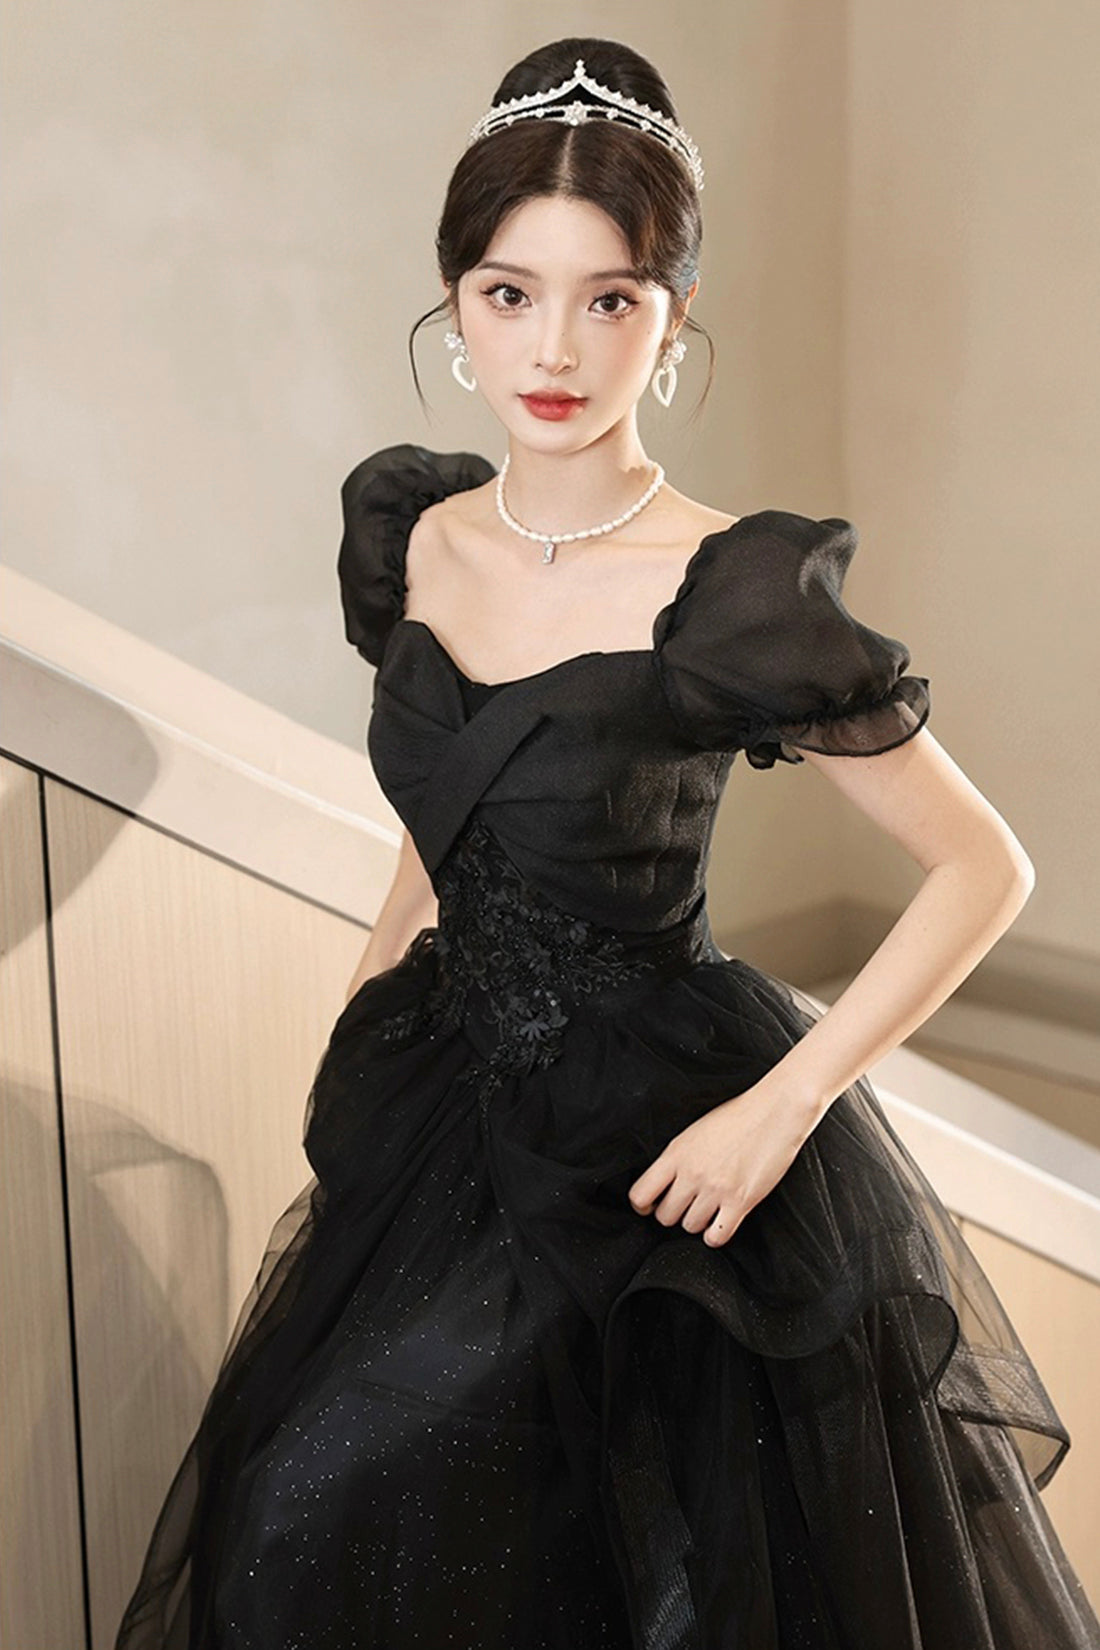 Black Ball Gown Flower Girl Dresses Little Girls Party Dress Black Pageant  Gowns | eBay